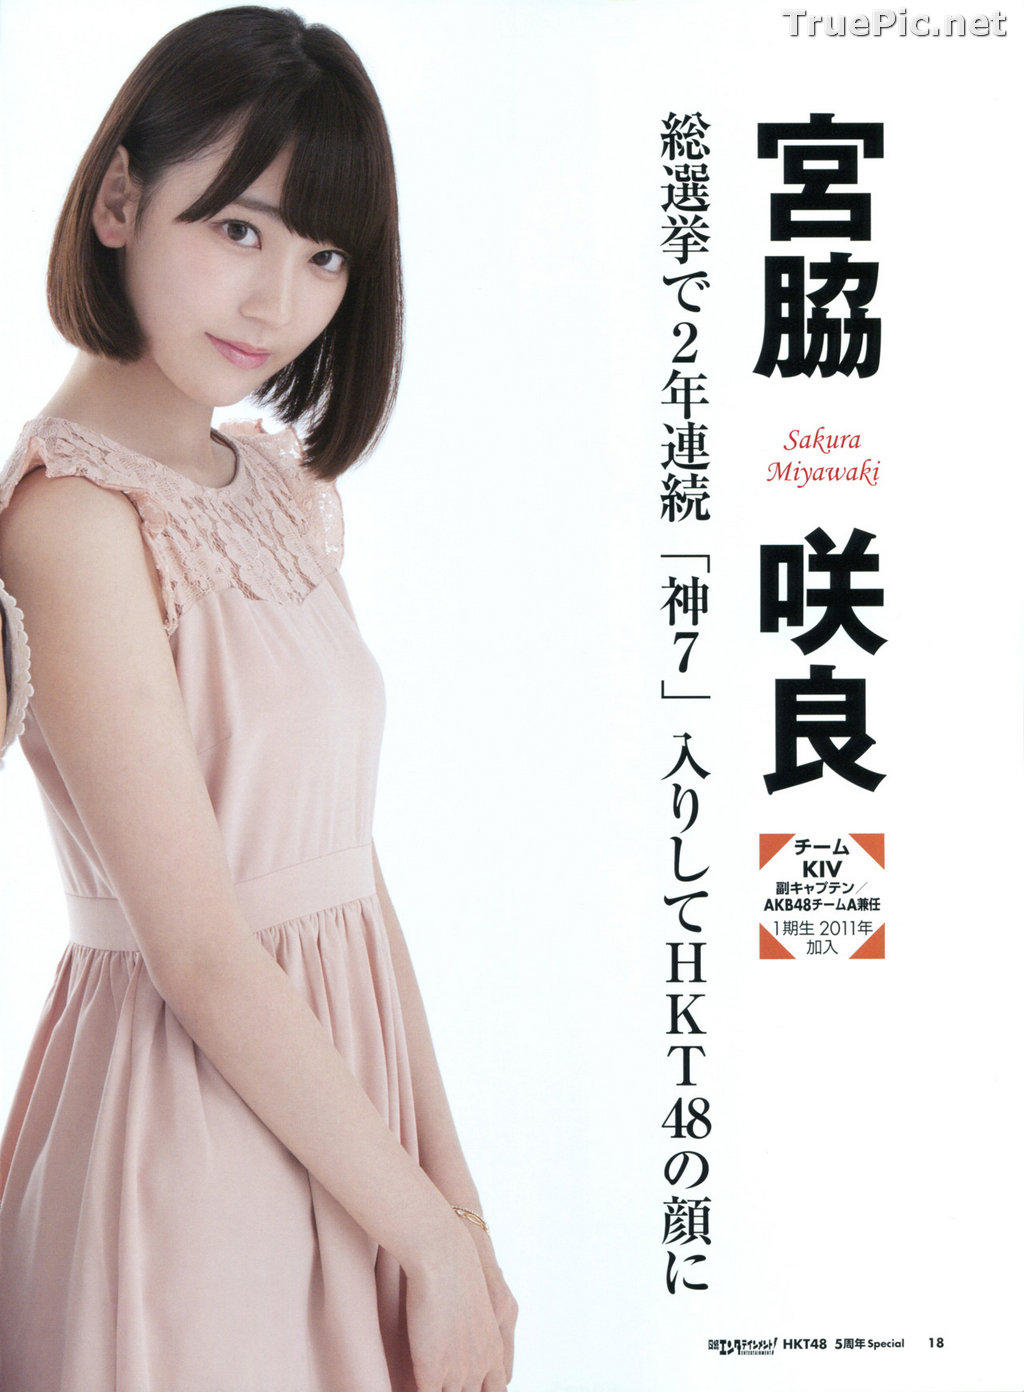 Image Japanese Singer and Actress - Sakura Miyawaki (宮脇咲良) - Sexy Picture Collection 2021 - TruePic.net - Picture-134